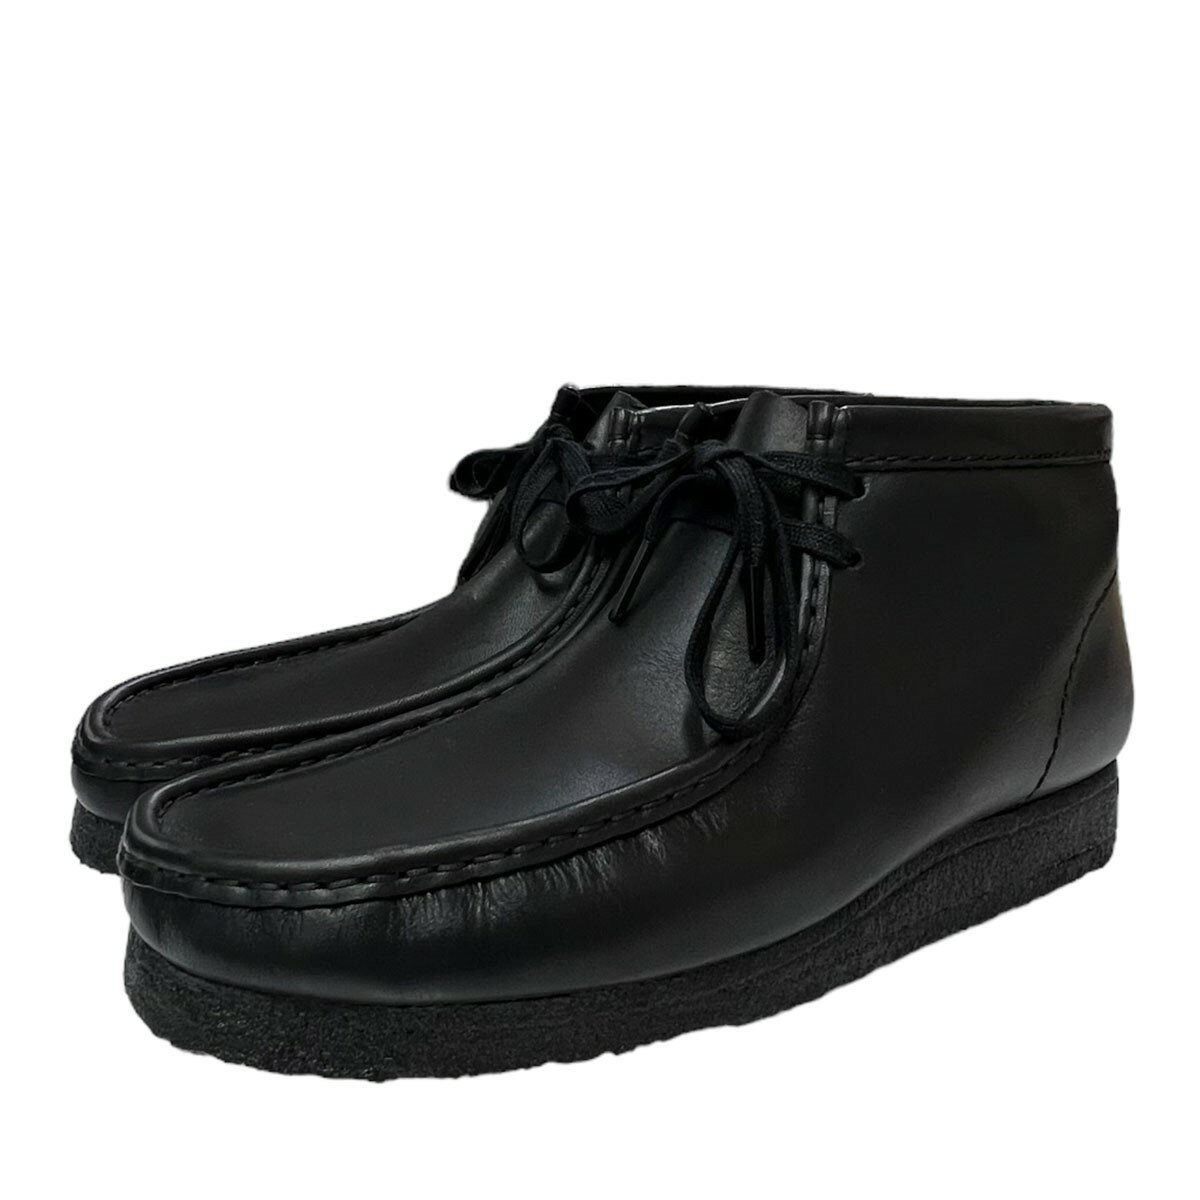 yÁzCLARKS ORIGINAL@Wallabee Boot Black Leather r[u[cubNU[ ubN TCYFUK9 y250623ziN[NXIWij